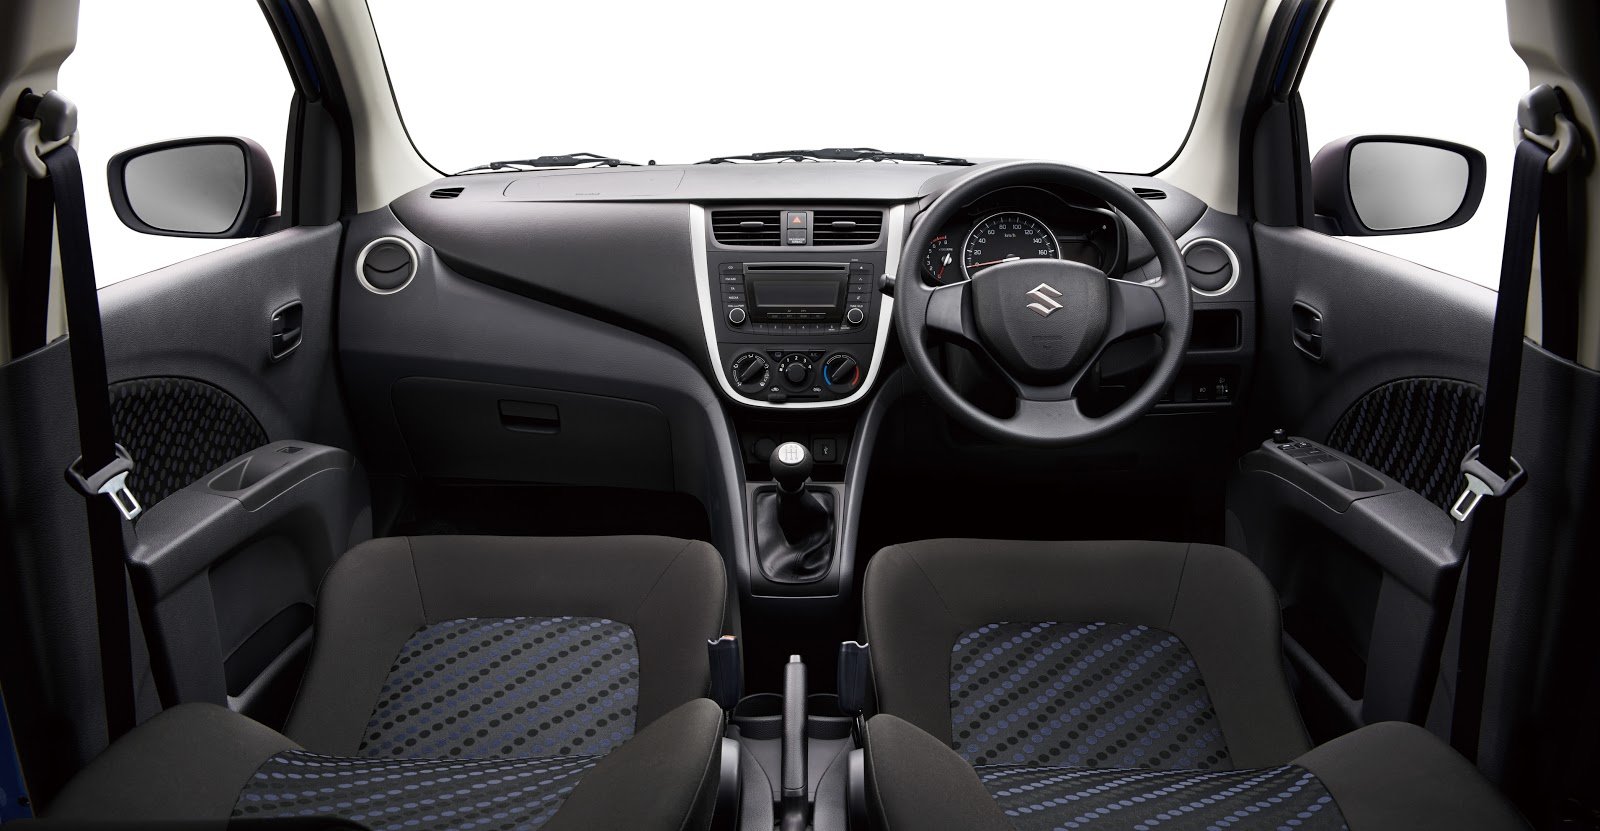 Suzuki vehicle Interior